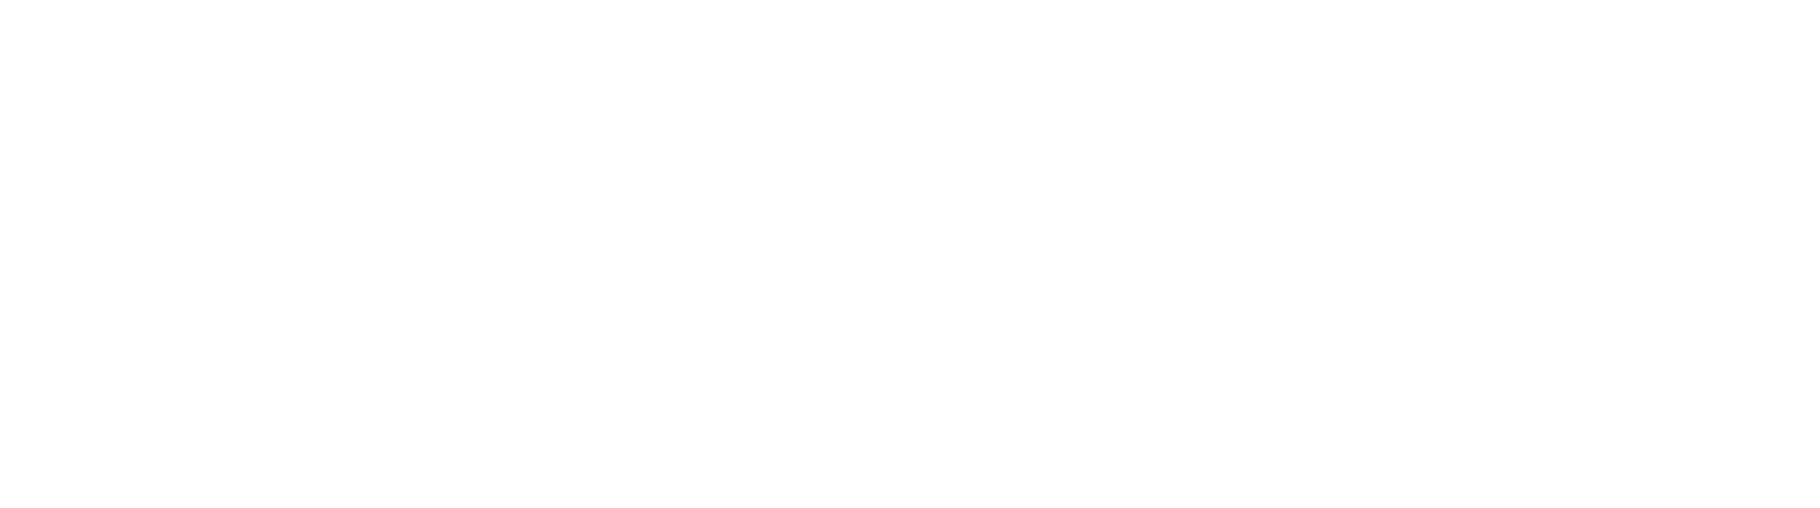 Slimtum - WIN a @slimtum PRO waist trainer with Reirei! Details below. 🖤  To enter: • Follow @slimtum & @reijuana_ifbbpro • Tag 2 friends in the  comments • Join the Slimtum broadcast